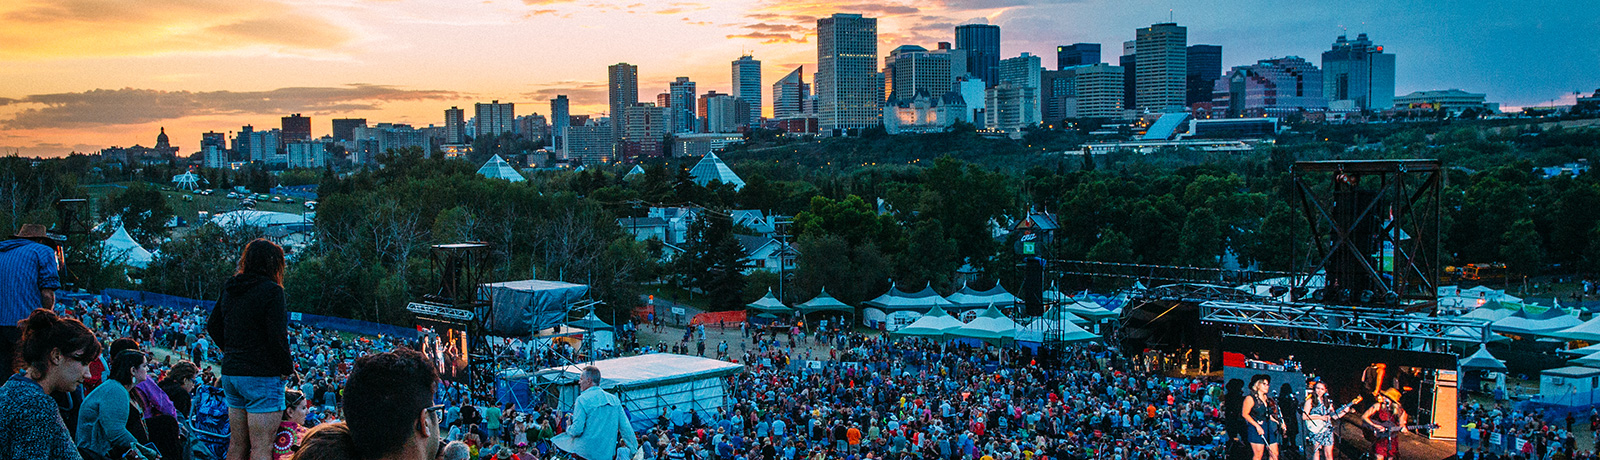 Edmonton skyline at folk fest